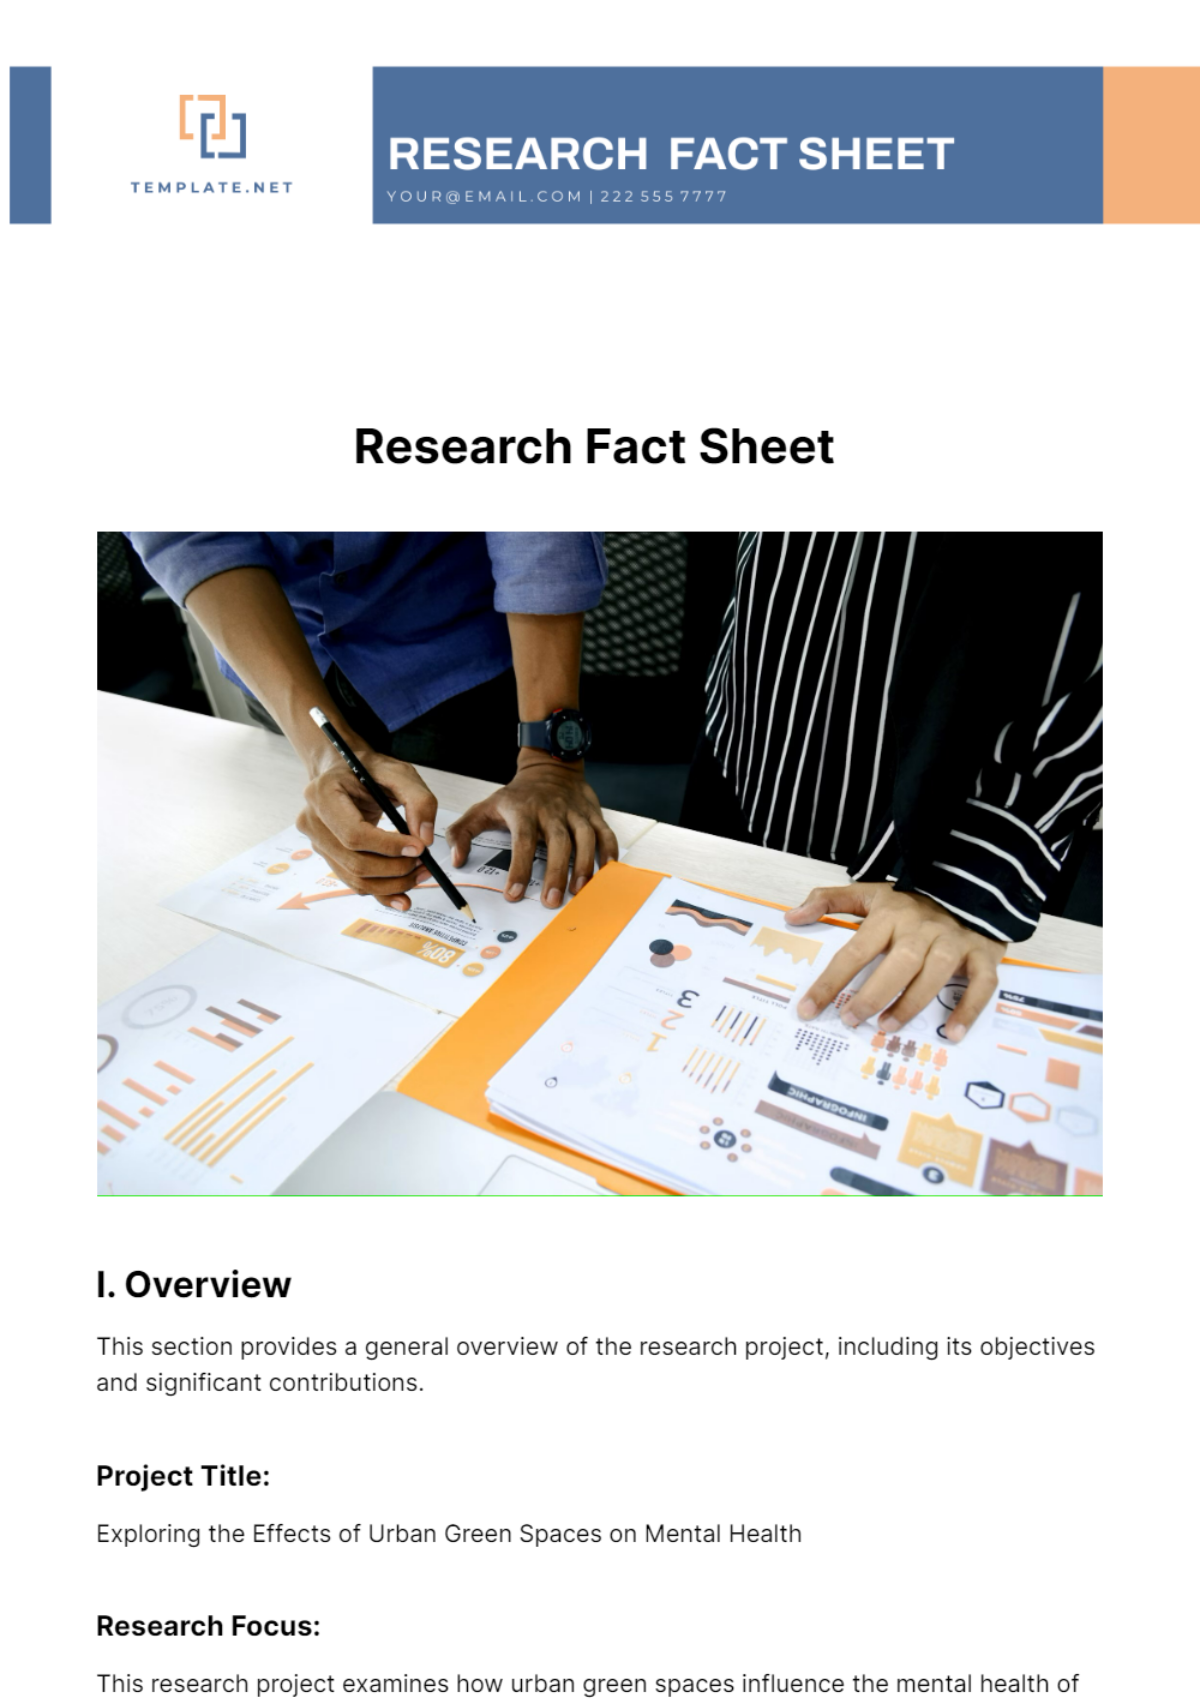 Research Fact Sheet Template